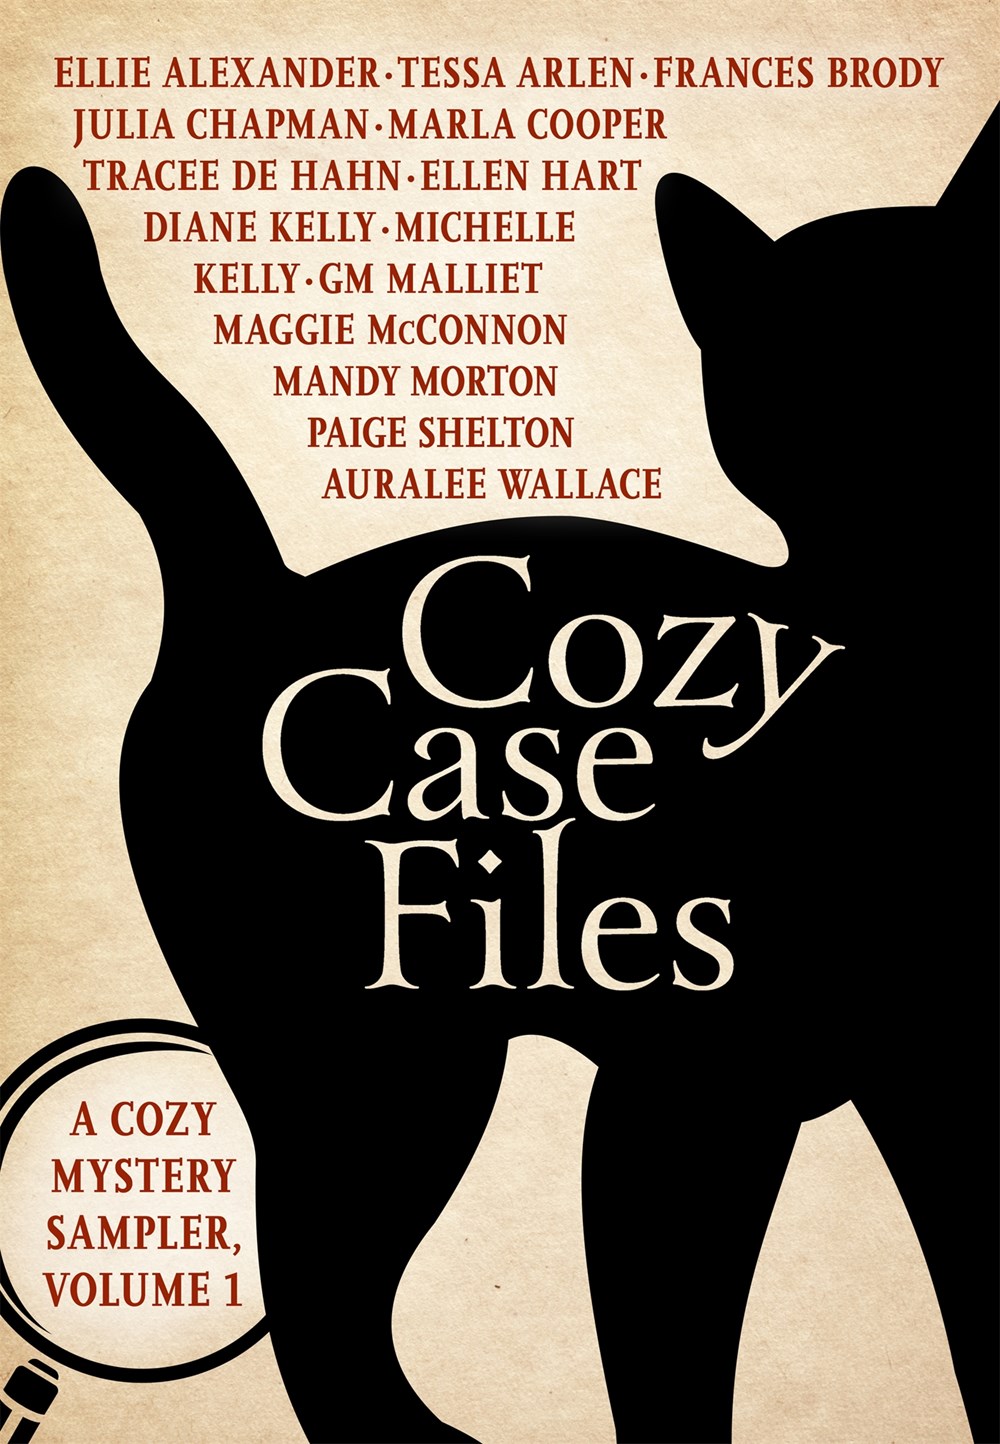 cozy case files cover